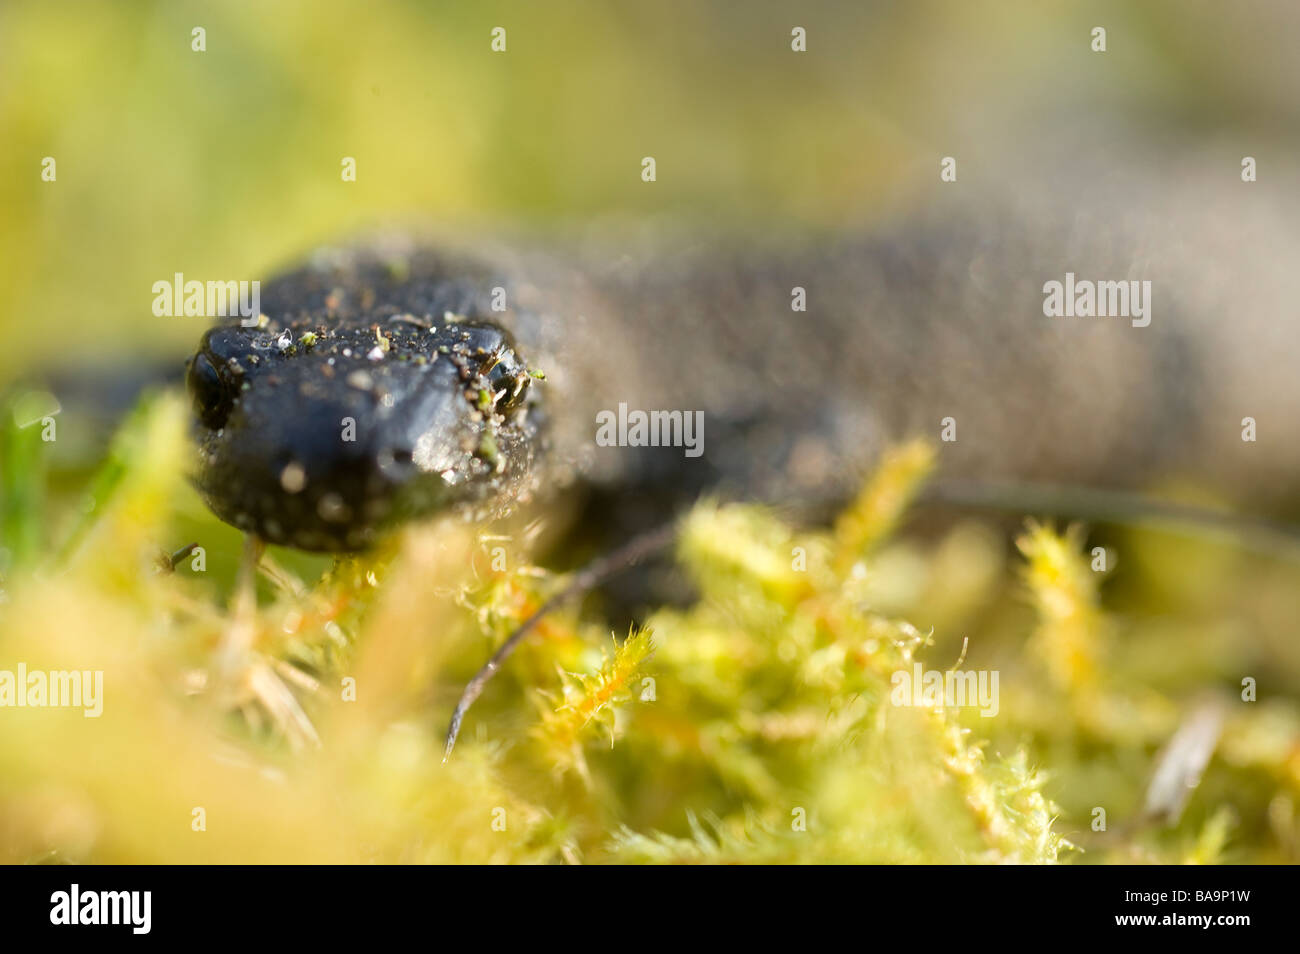 Salamandre (Triturus vulgaris) dans la nature, la Suède Banque D'Images